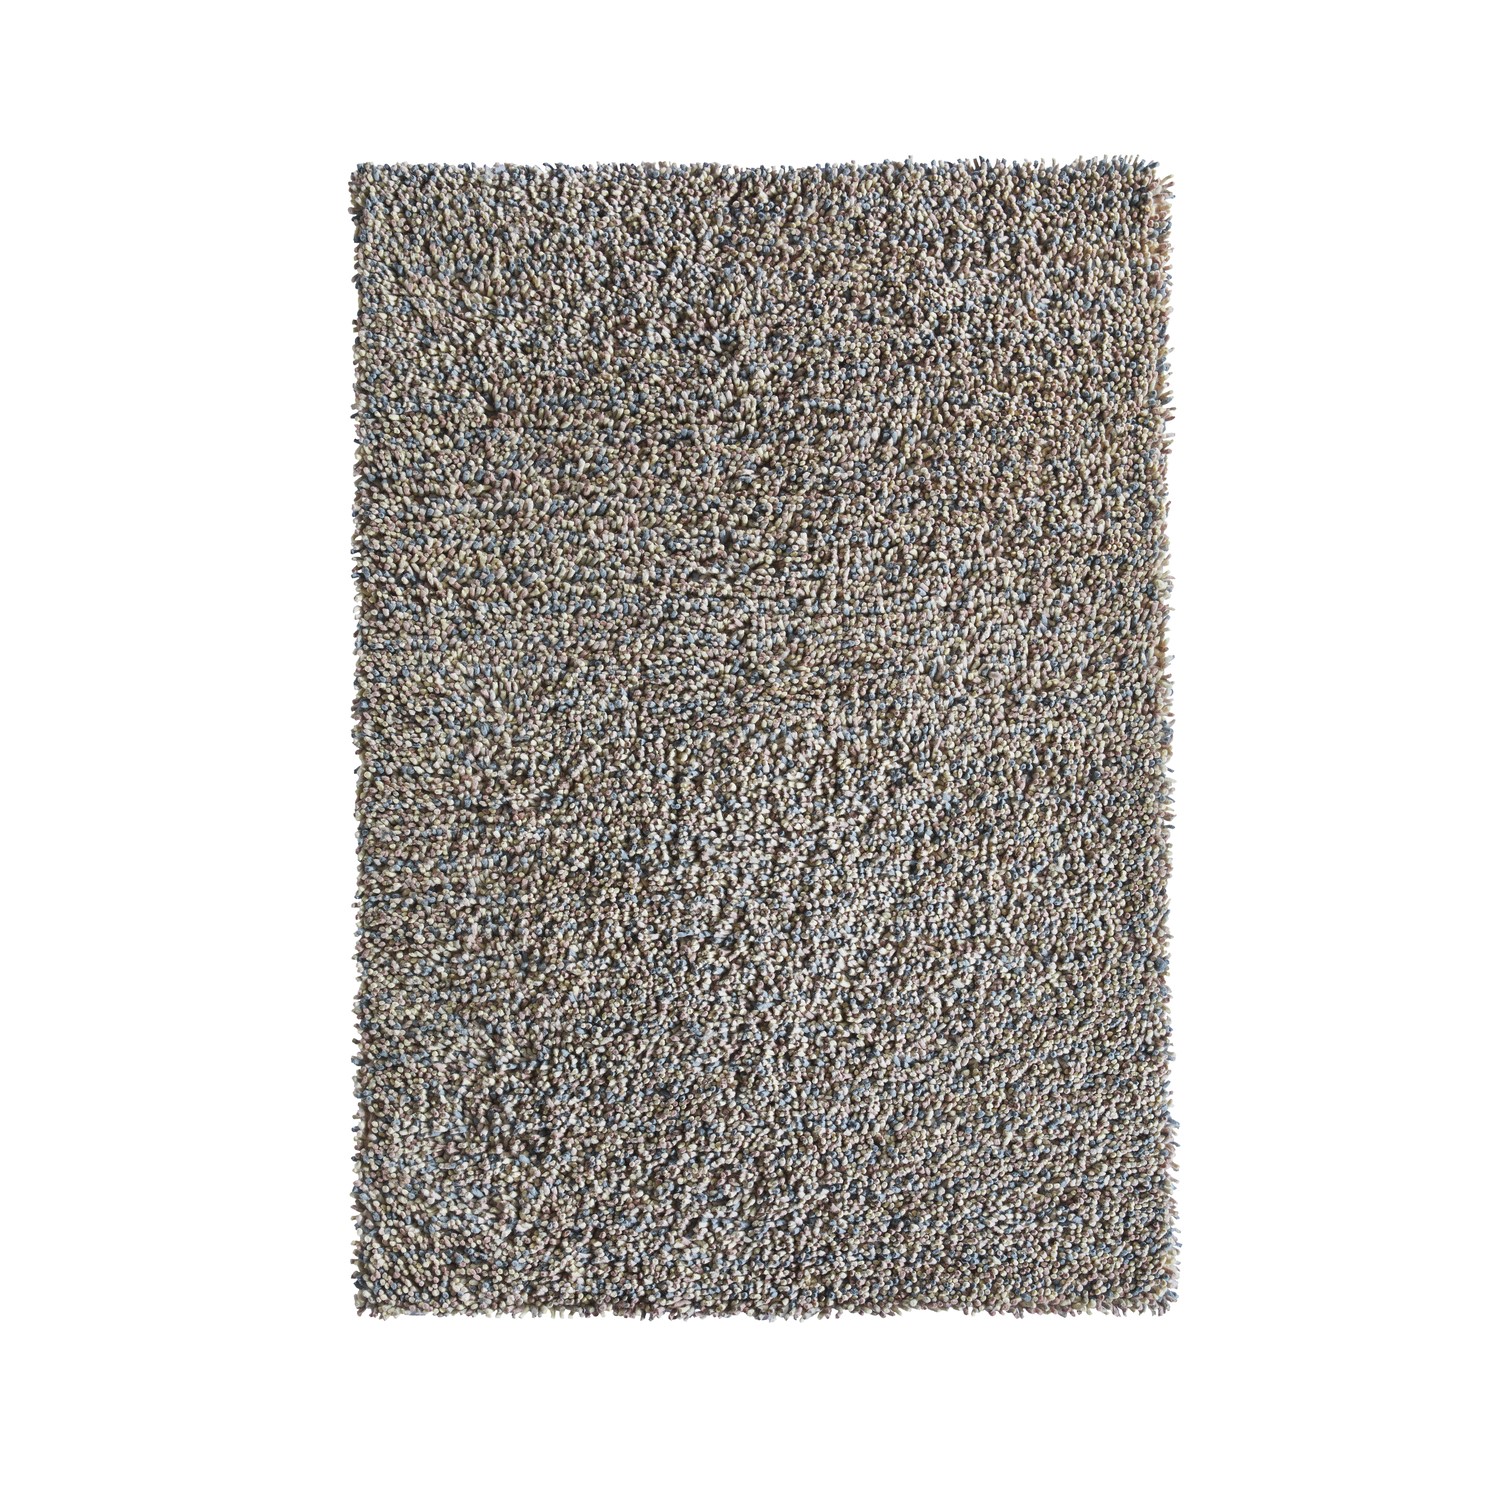 Photo of Ripley rocks shaggy rug in pastel - 160x230cm